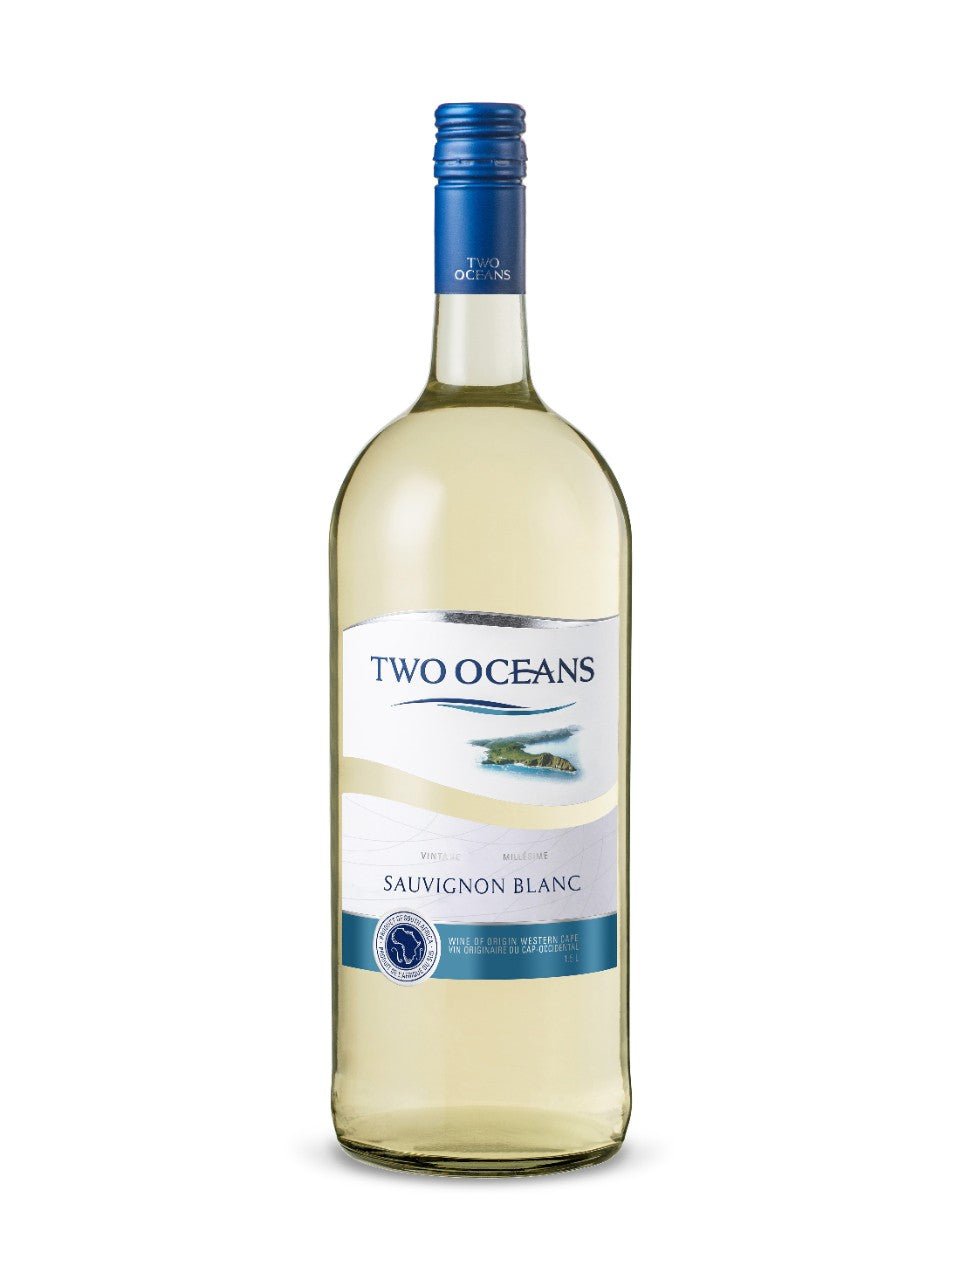 Two Oceans Sauvignon Blanc 1500 mL bottle